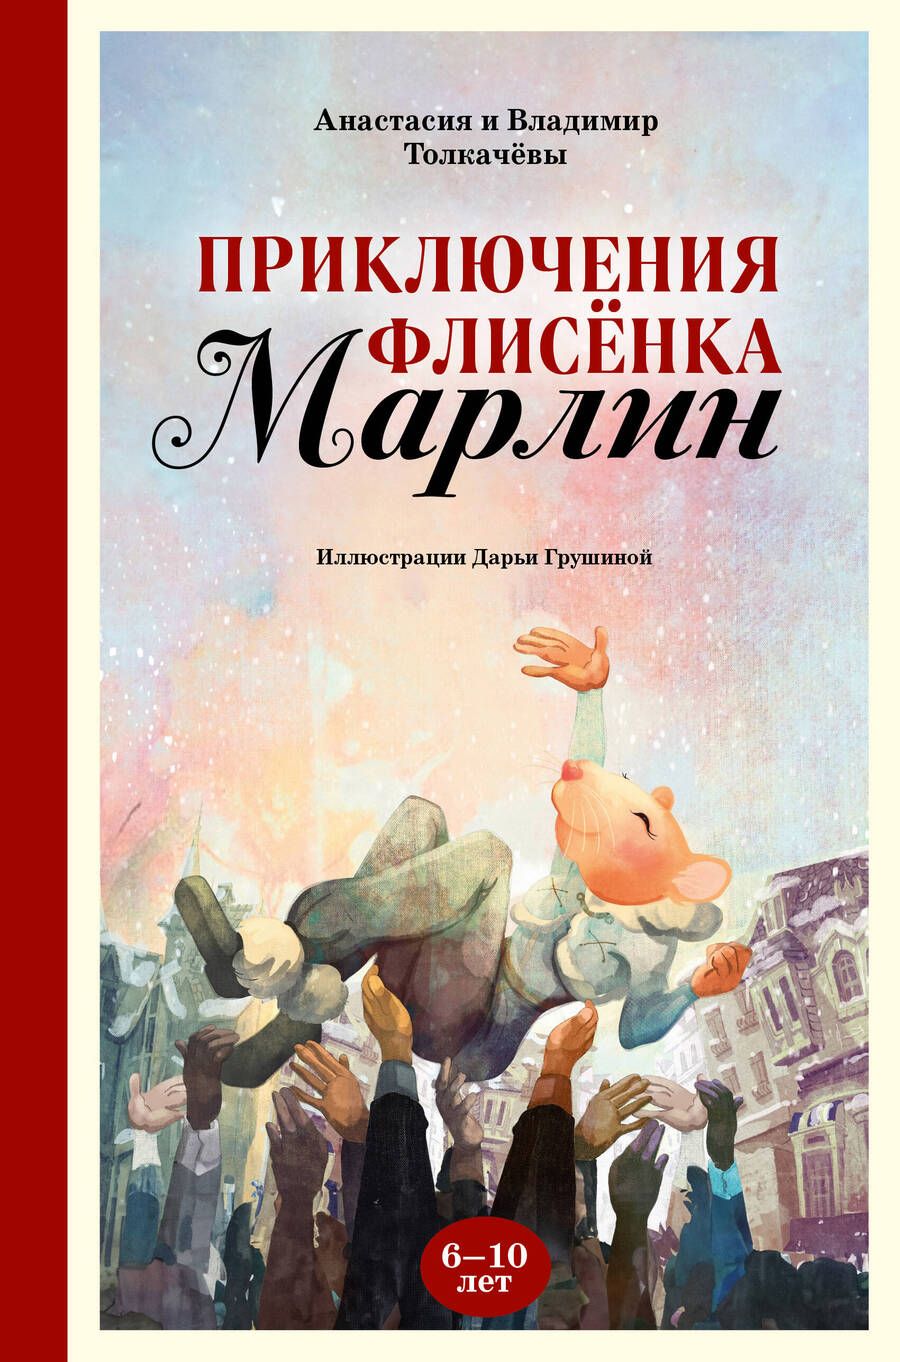 Обложка книги "Толкачёва, Толкачёв: Приключения флисёнка Марлин"